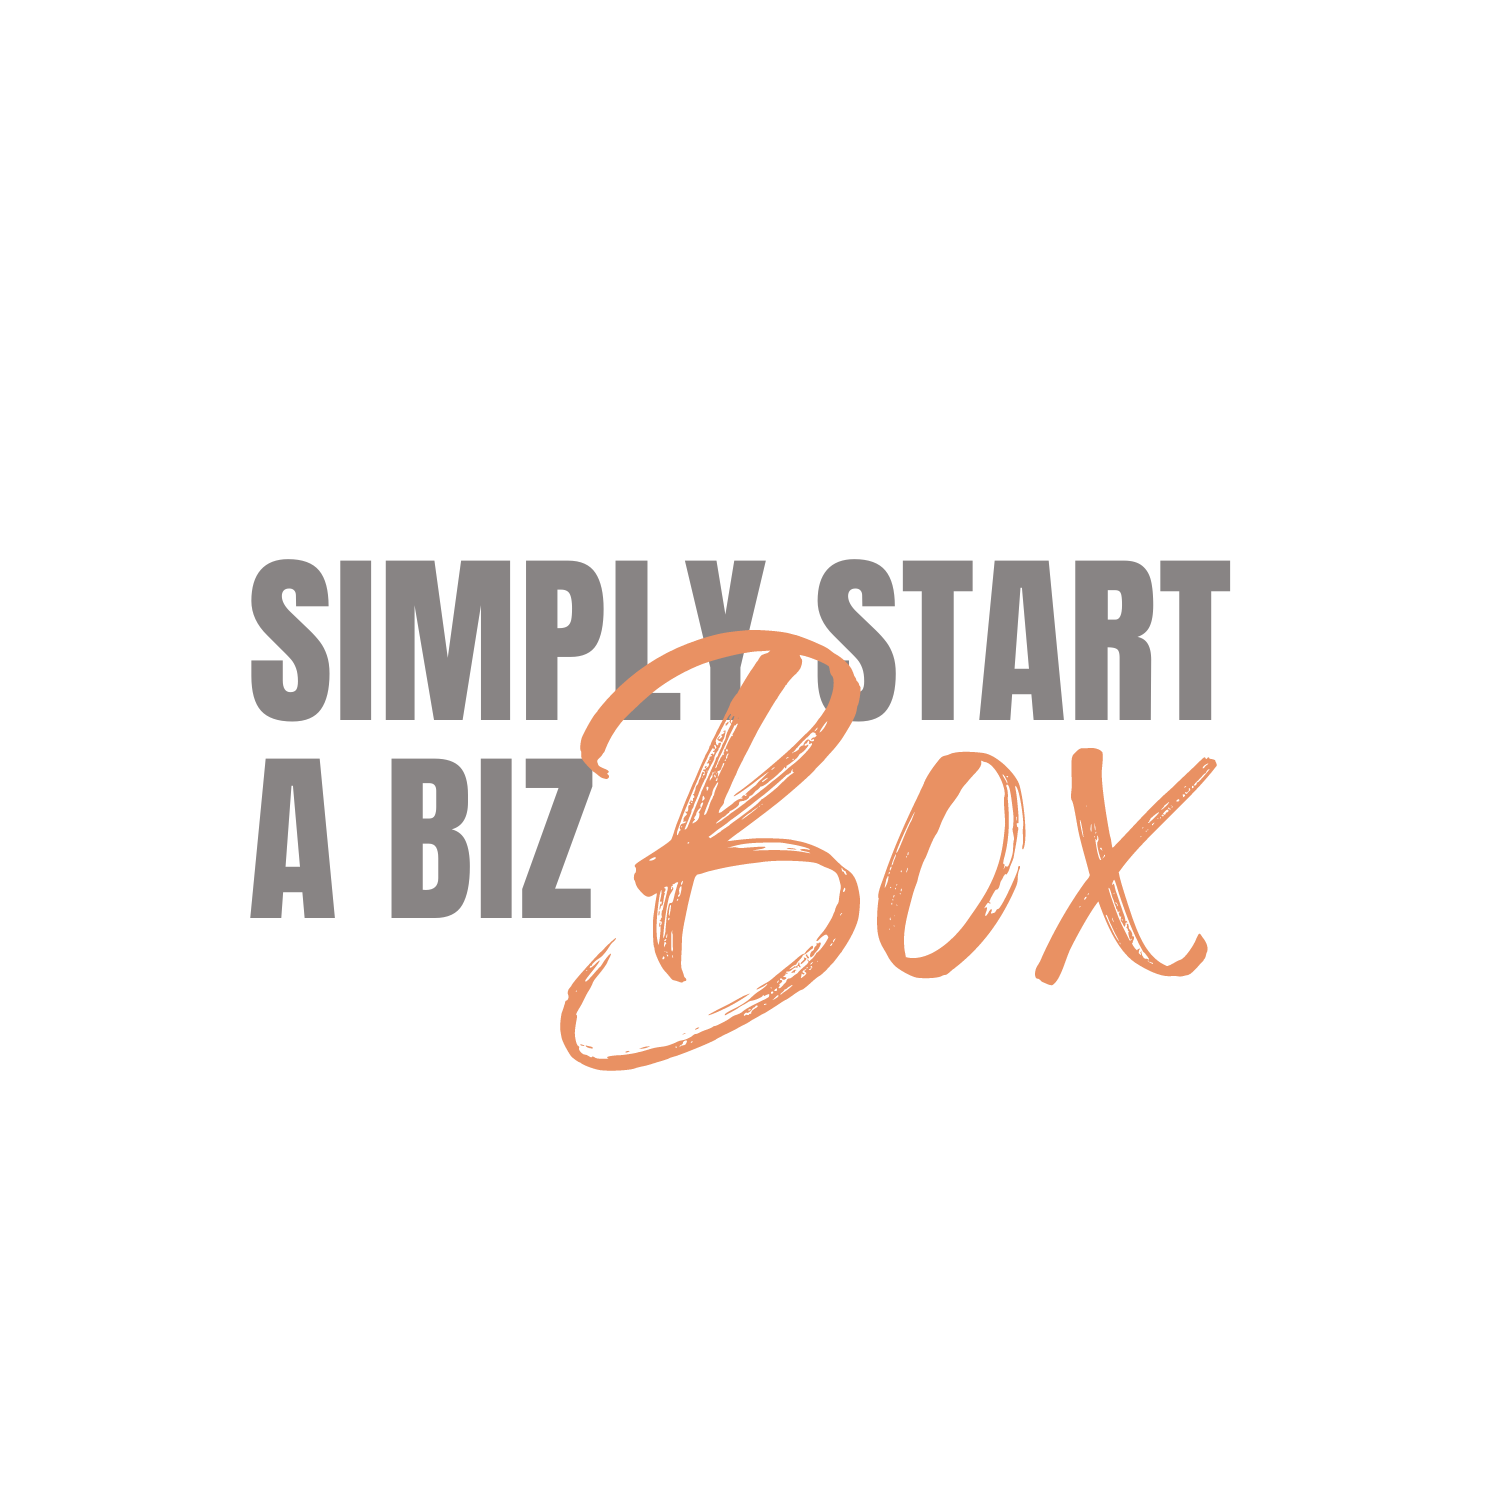 Simply-start-a-biz-box